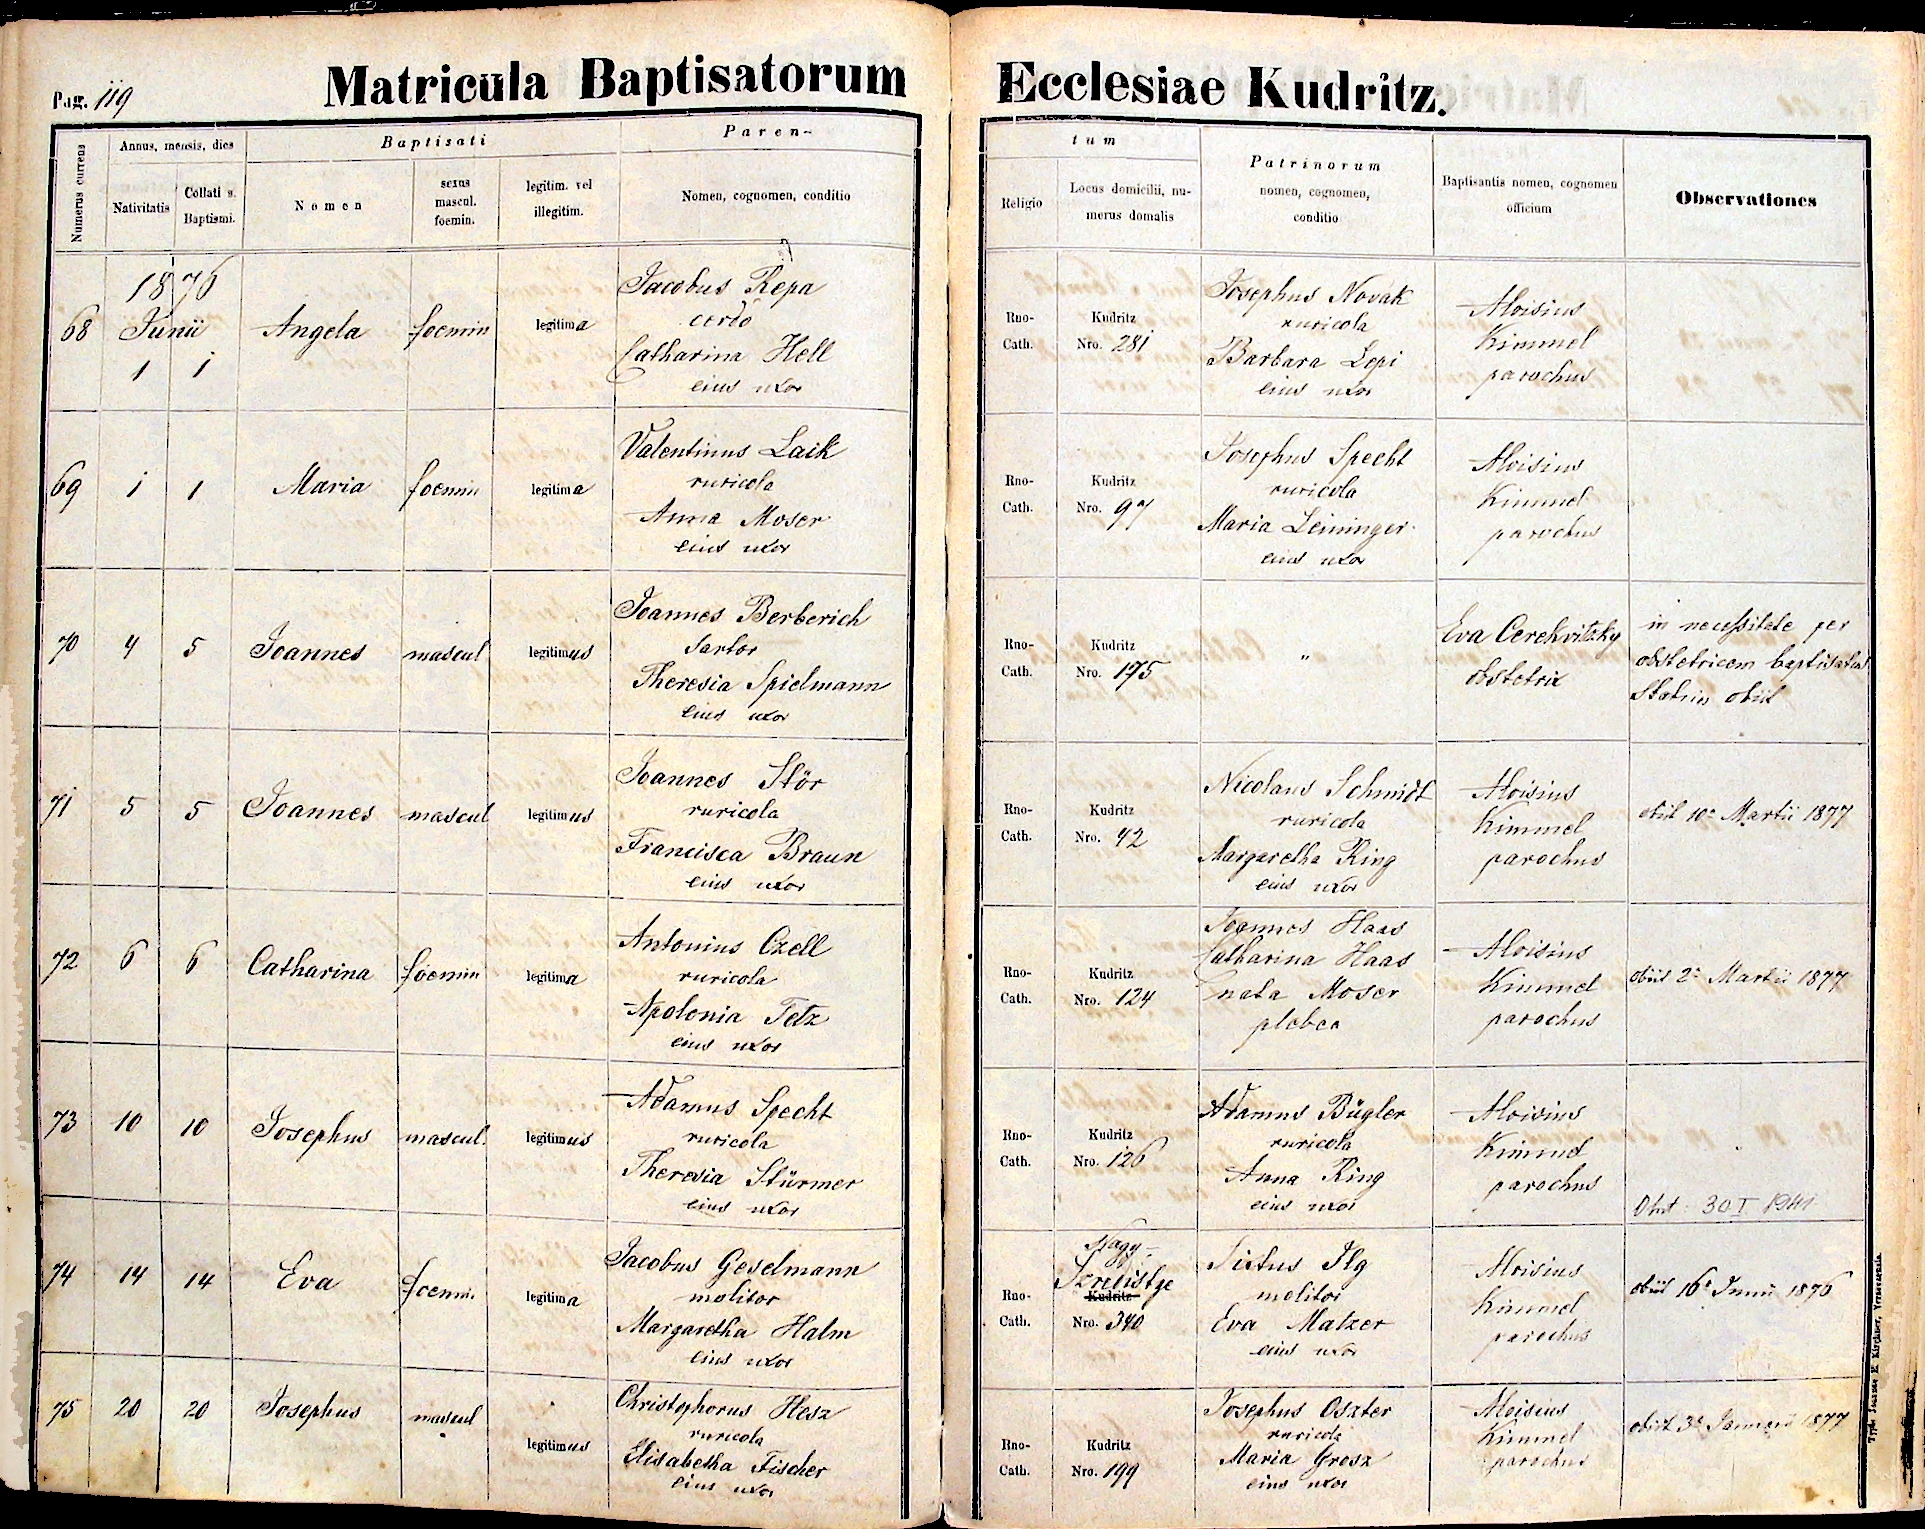 images/church_records/BIRTHS/1870-1879B/1876/119